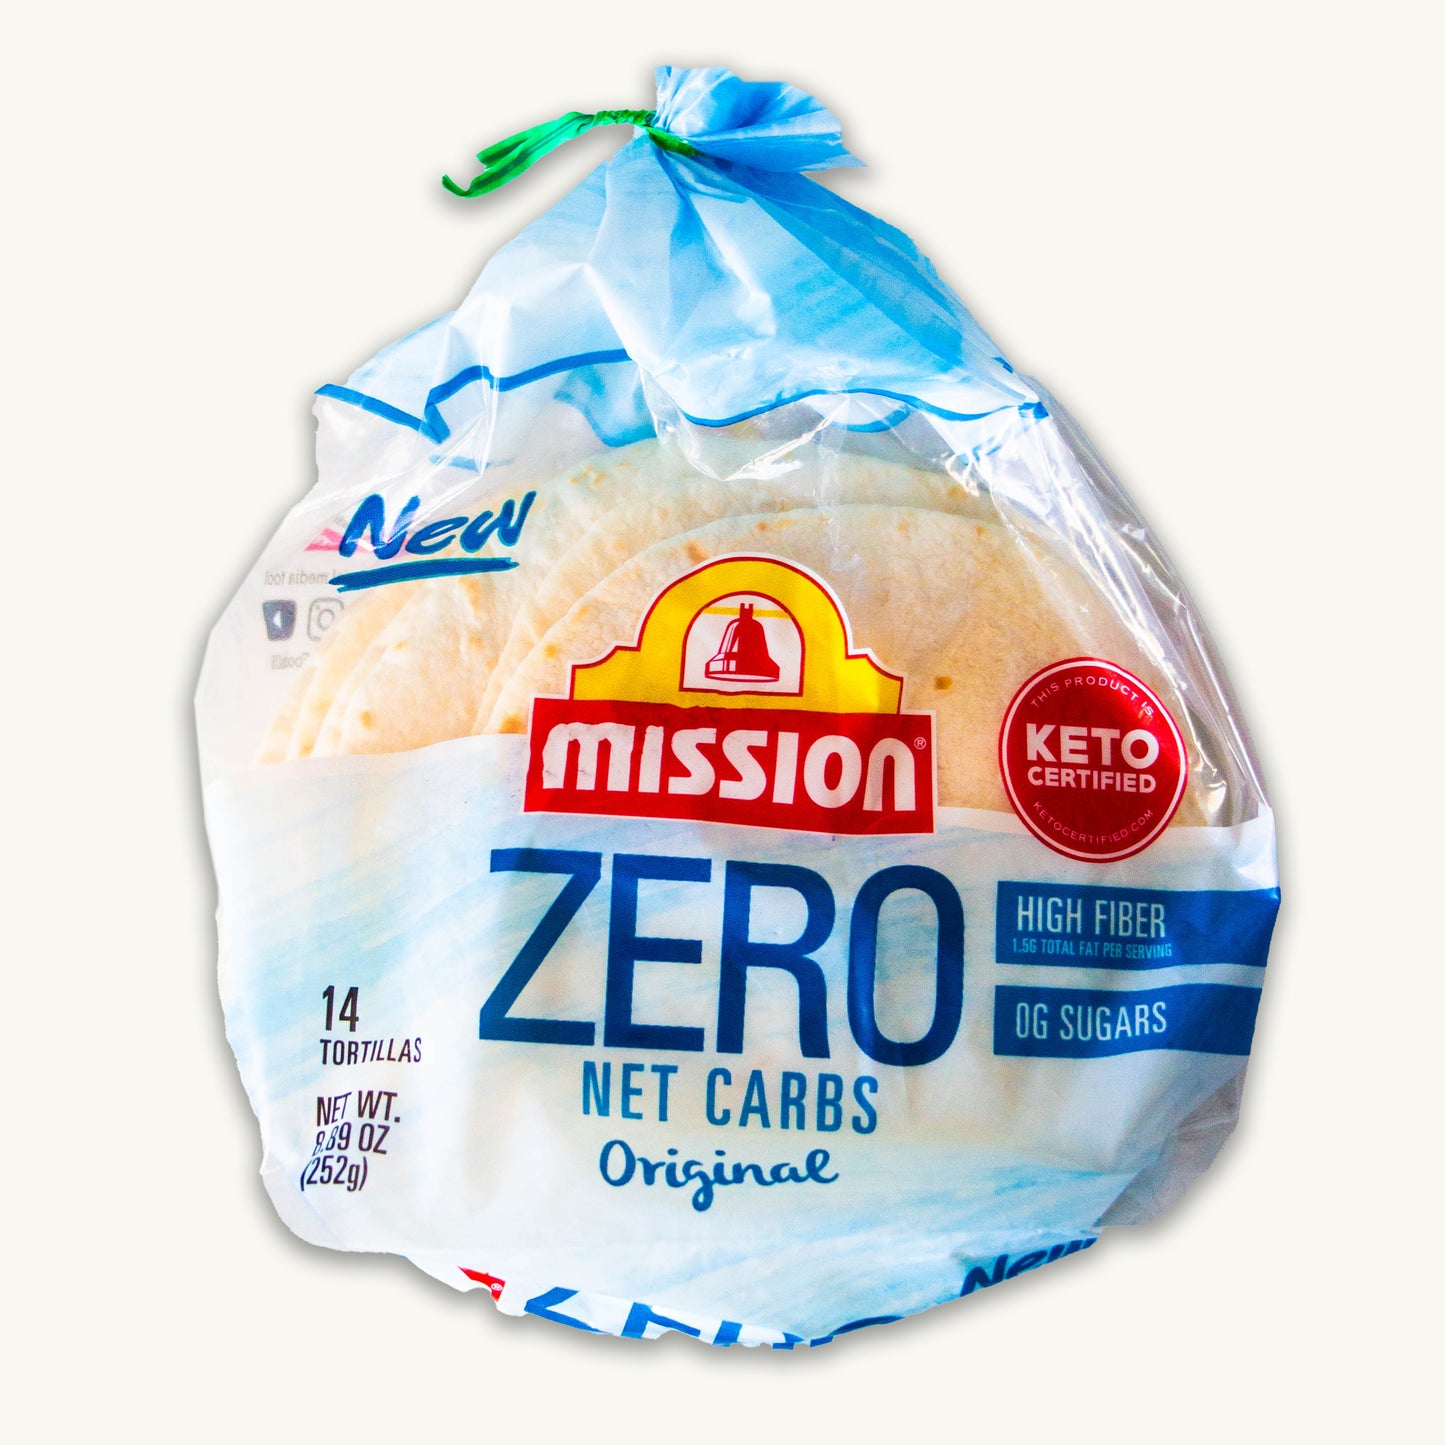 Mission Zero Net Carbs Original Tortillas 14ct